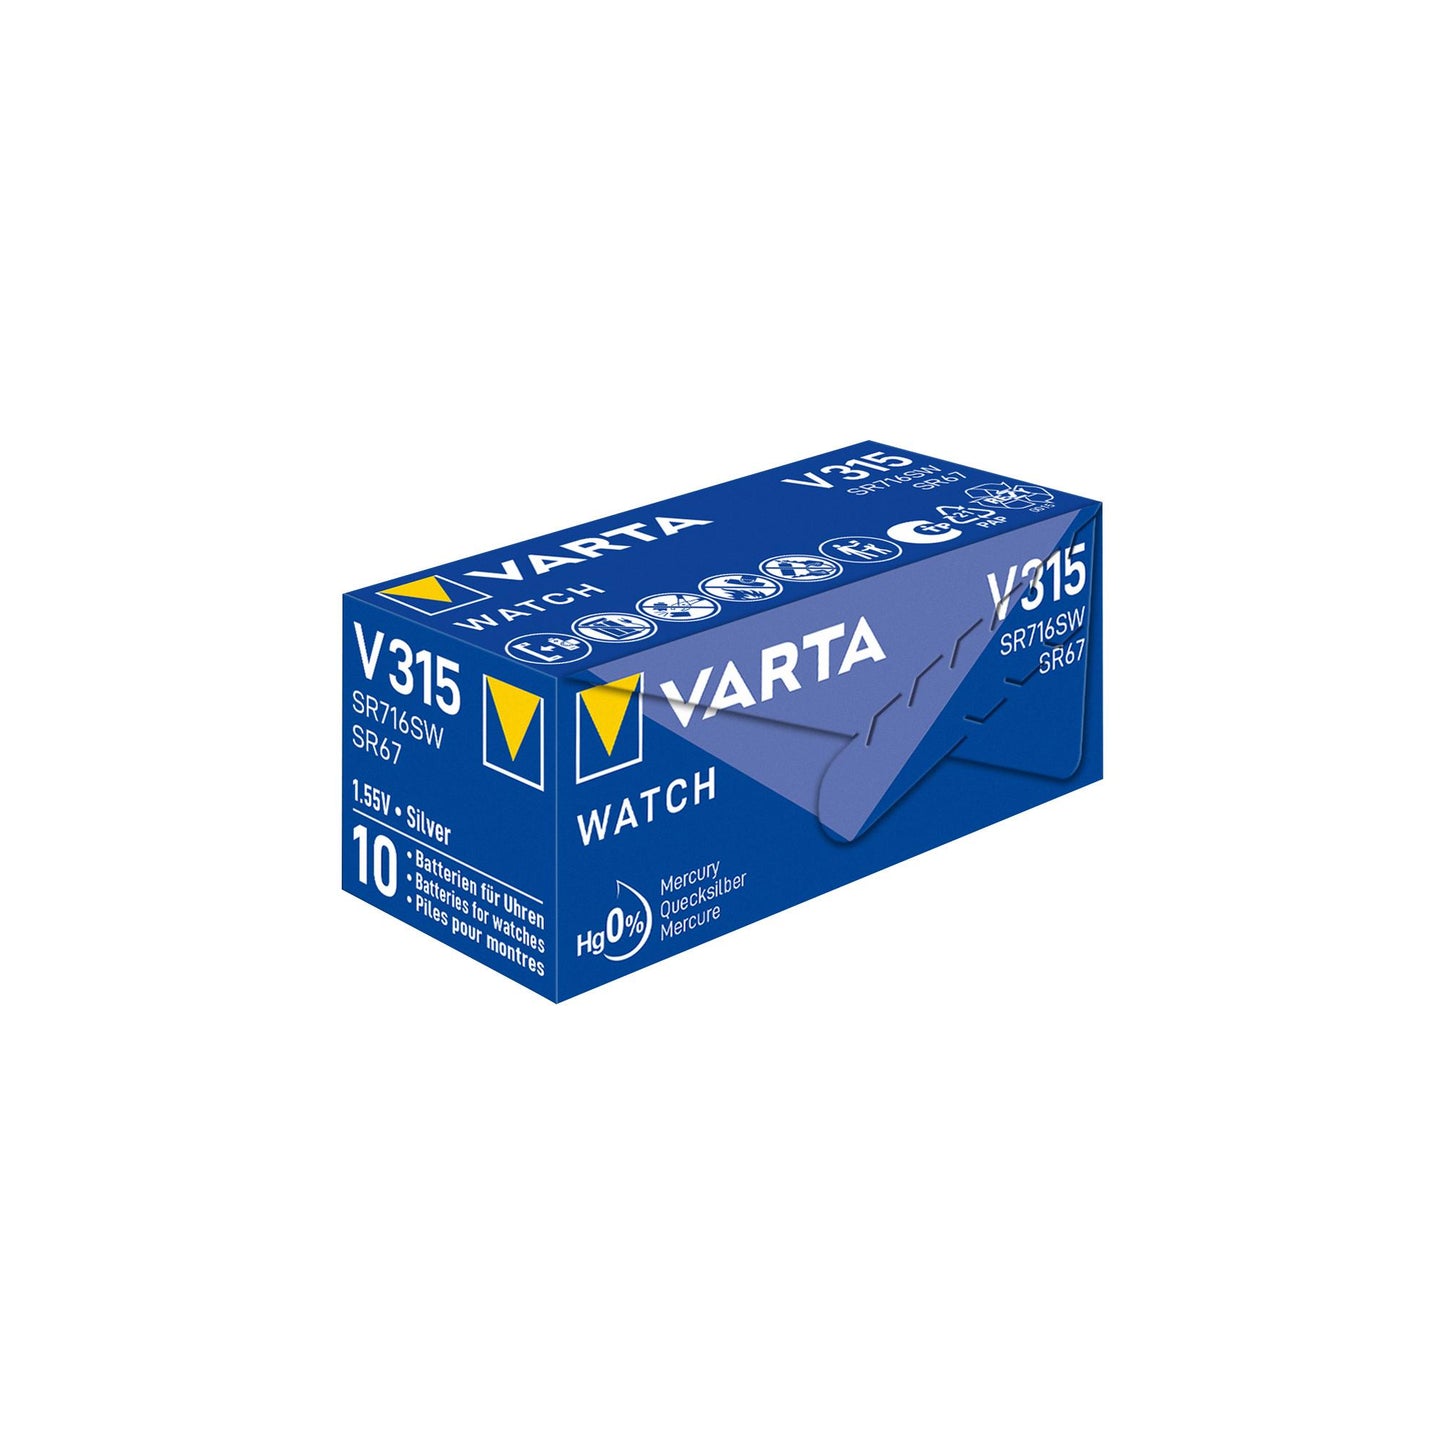 VARTA Batterie Silver Oxide Knopfzelle 315, SR67, 1.55V Watch, Retail (10-Pack)